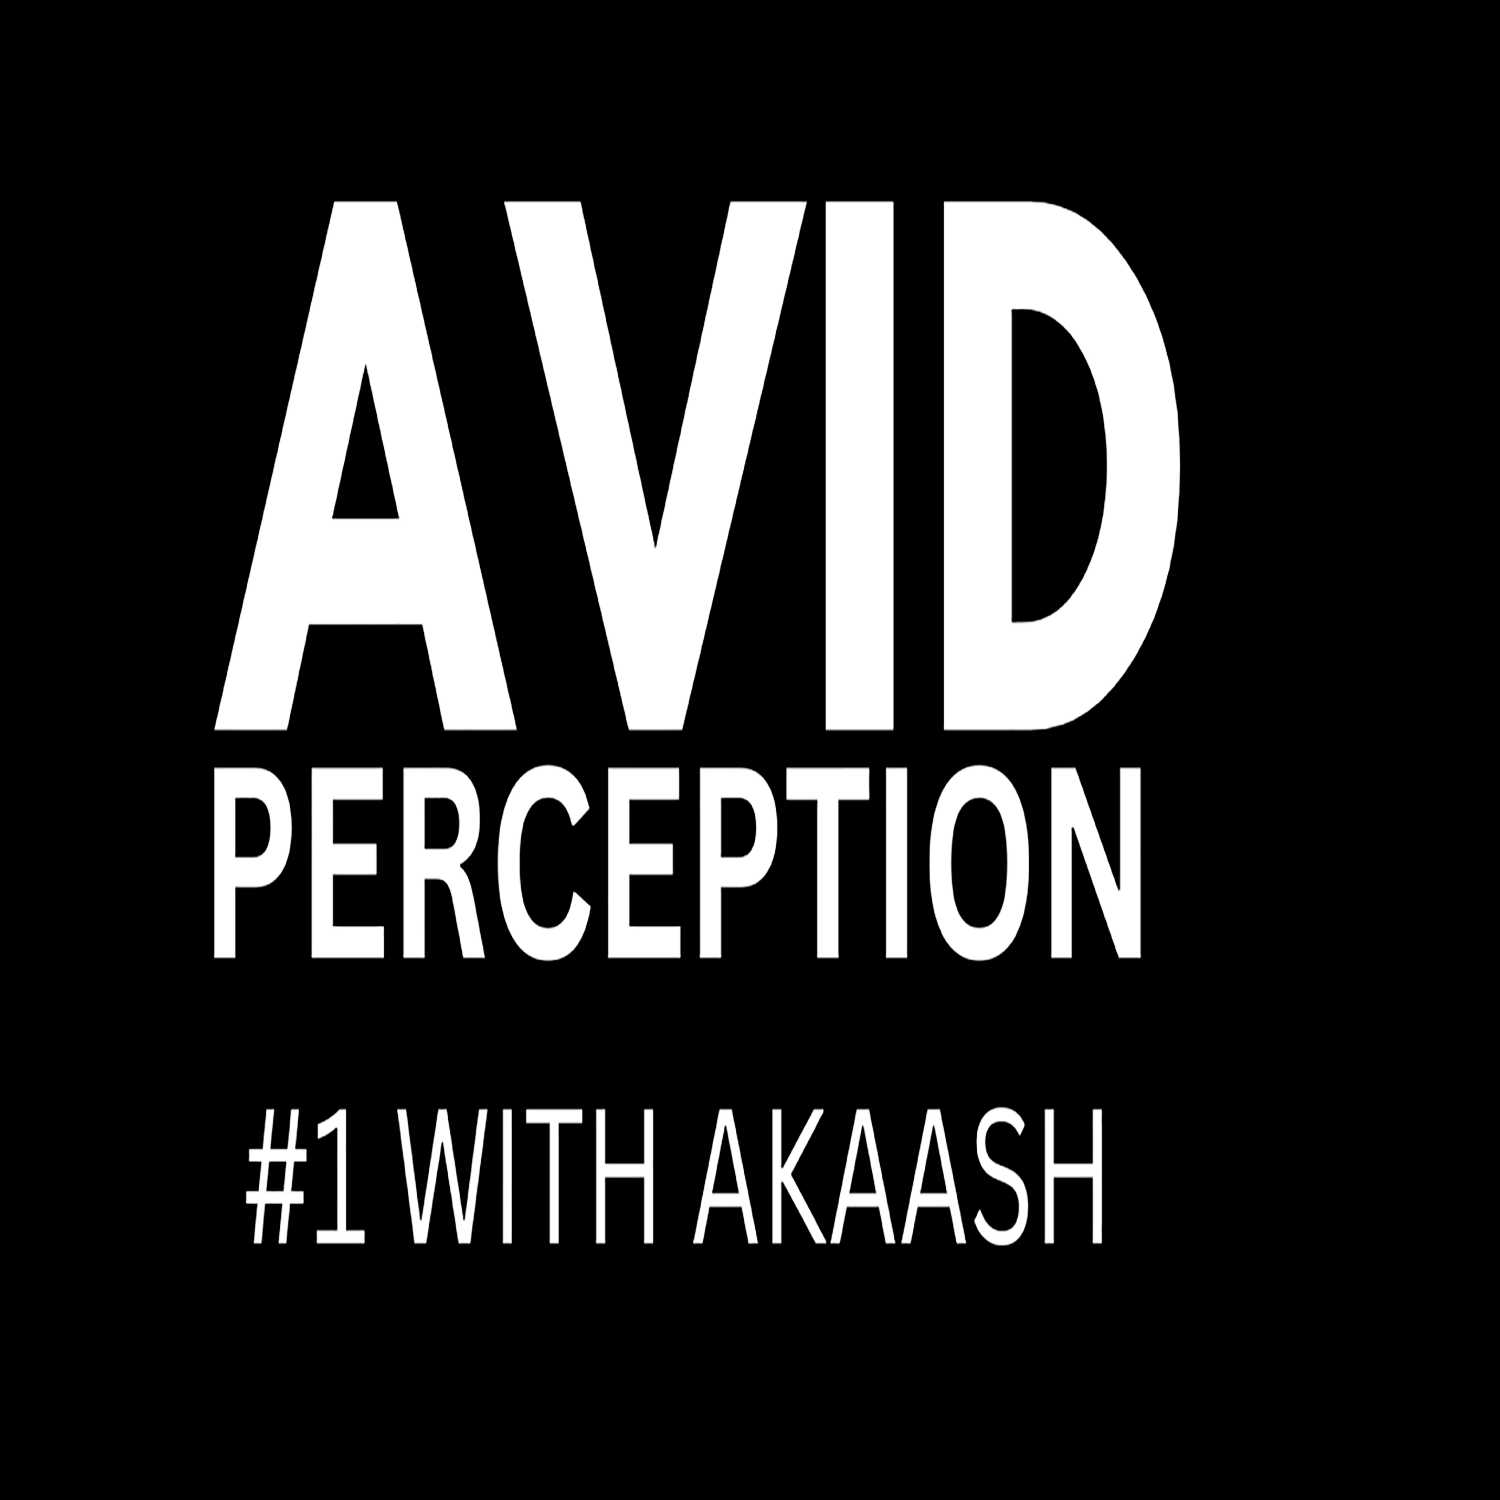 #1 - AVID PERCEPTION WITH AKAASH